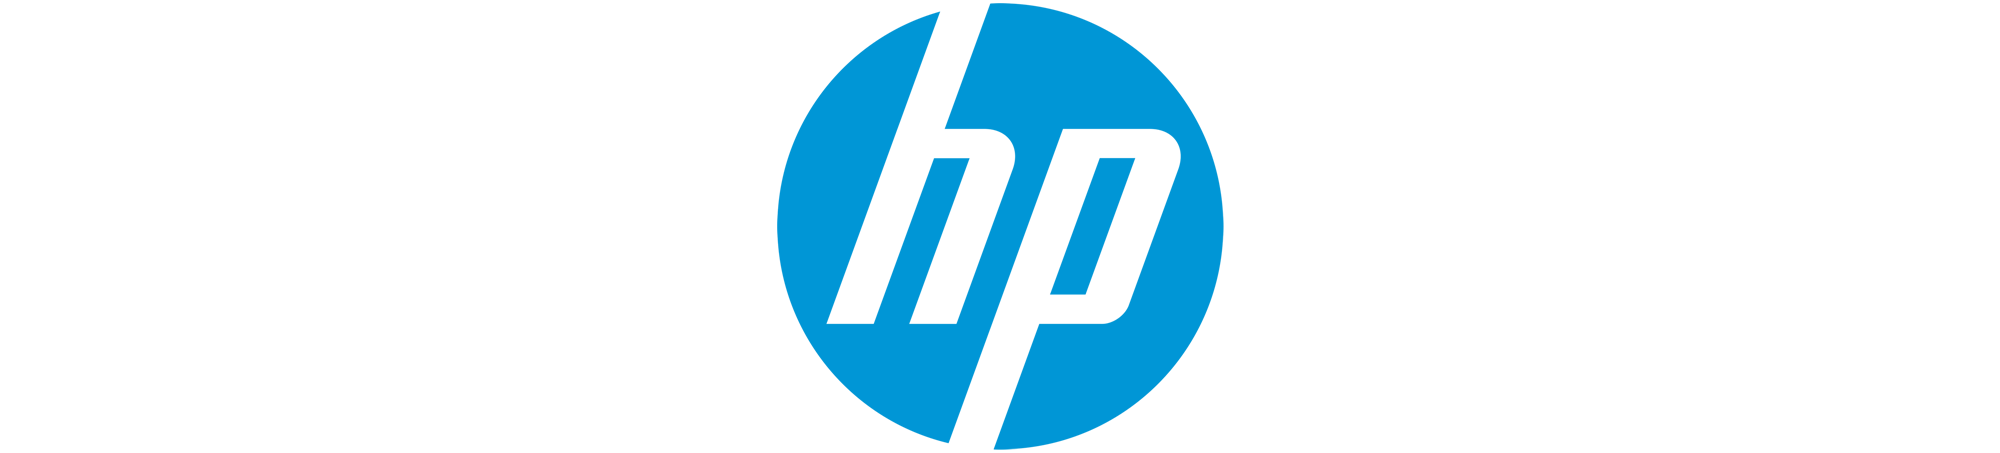 HP Logo - Logo Hp Inc PNG Transparent Logo Hp Inc.PNG Images. | PlusPNG